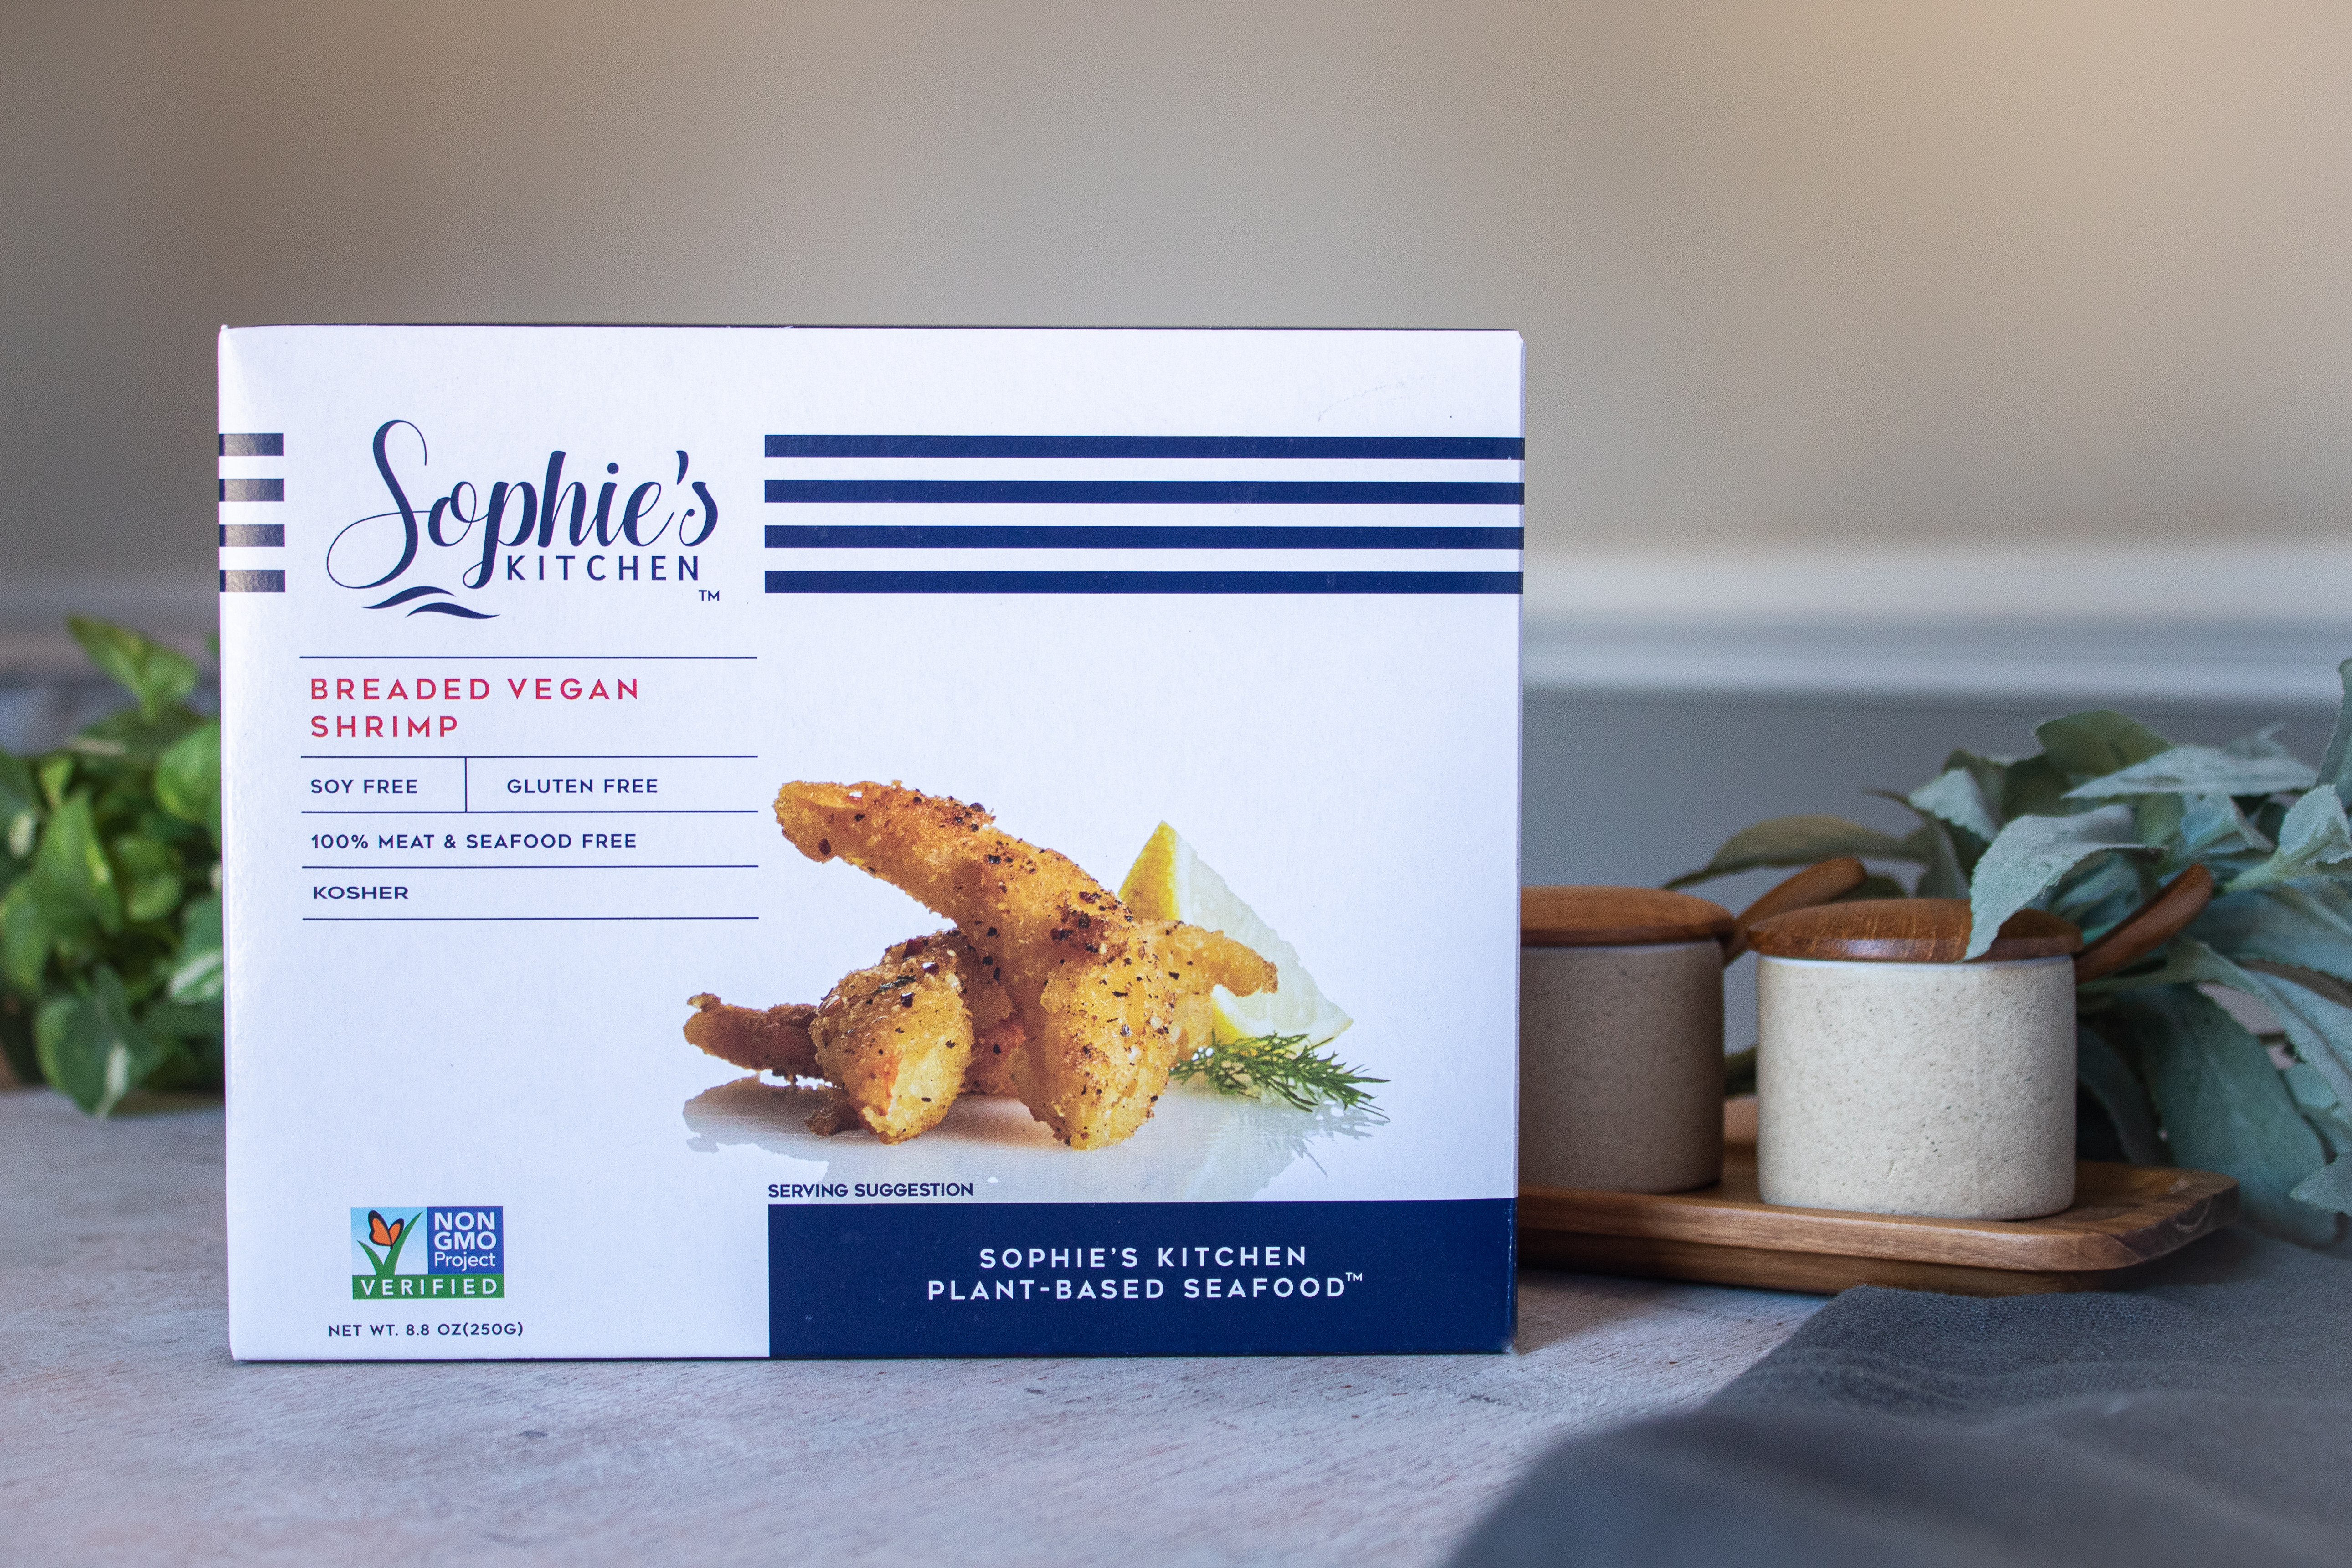 Sophie's Kitchen Vegan Breaded Shrimp - image 2 of 2